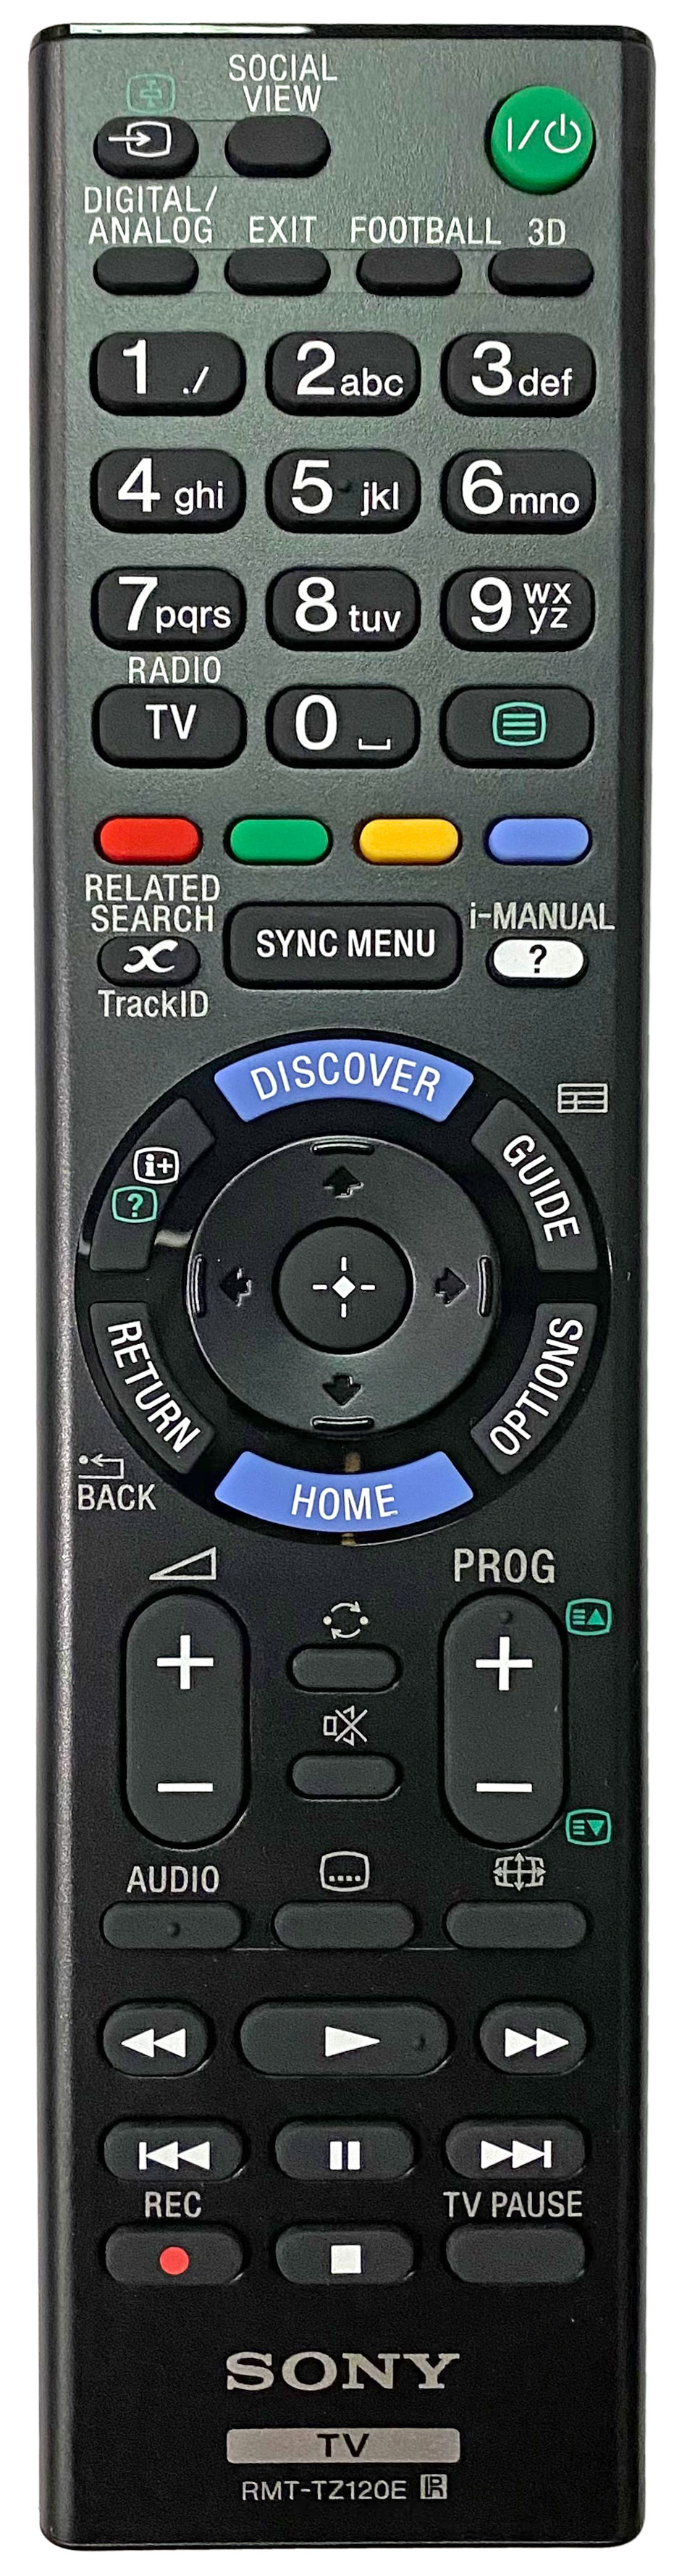 Sony Kdl50w828b Remote Control: CMB4759 - Controls Shop